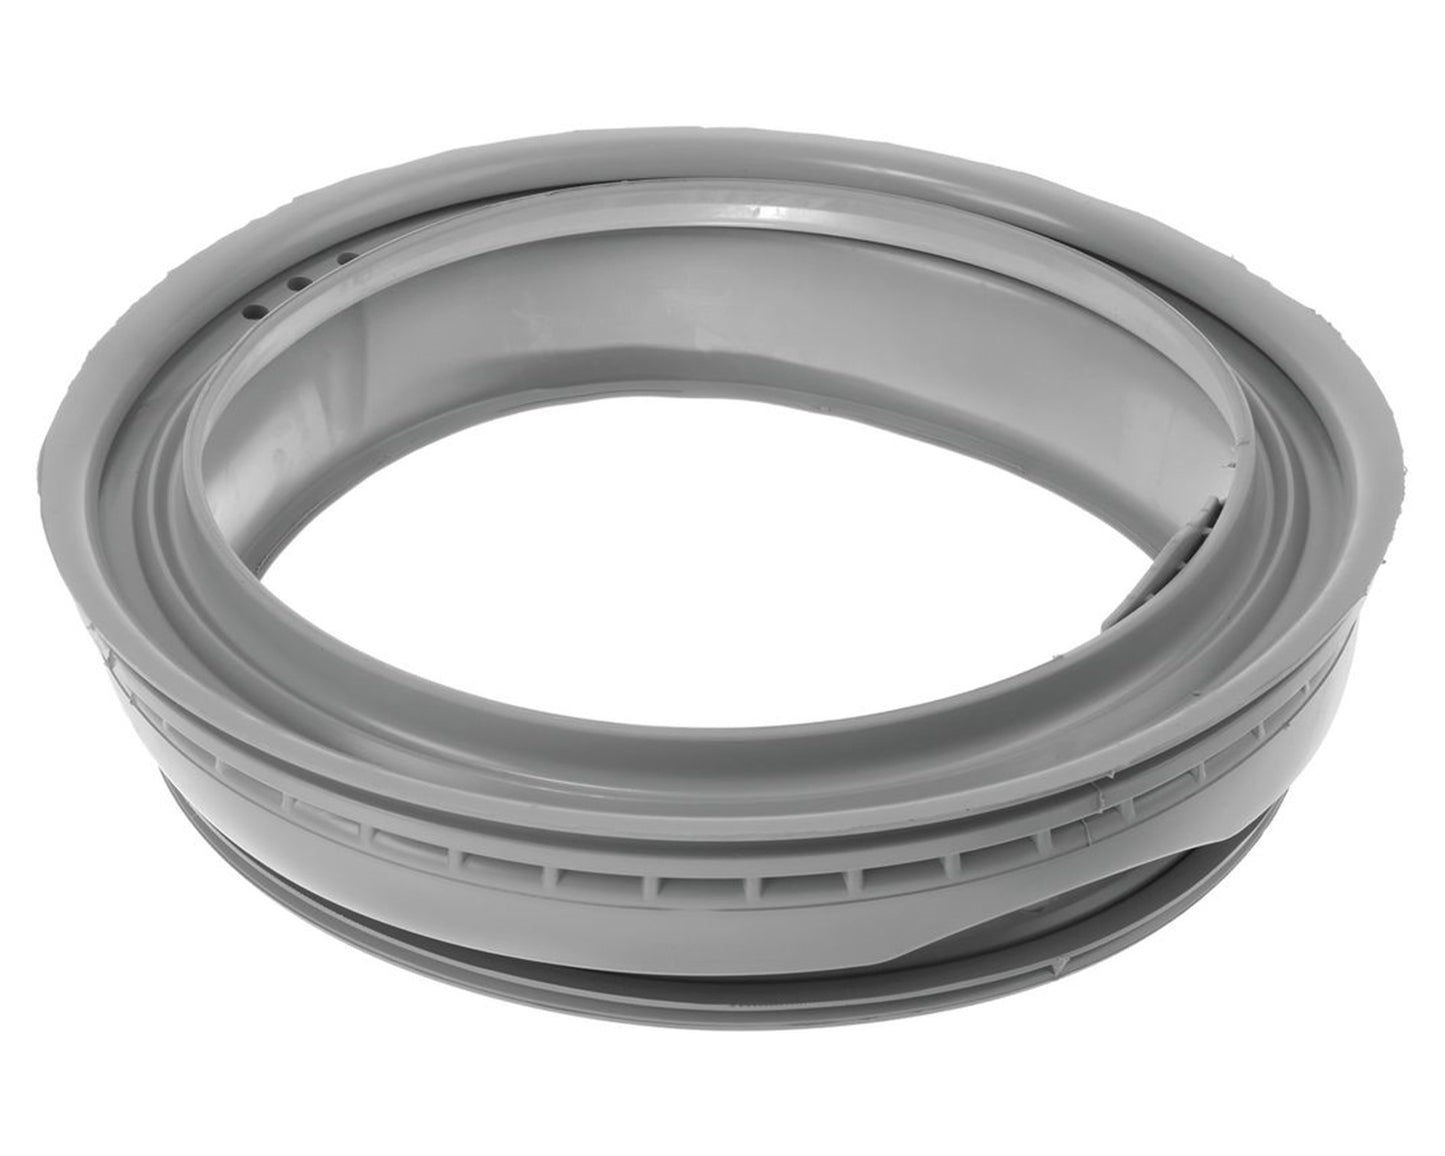 Washing Machine Rubber Door Gasket Seal for Bosch Maxx WAE24164GB/22, WFO2867GB/12 - 00354135